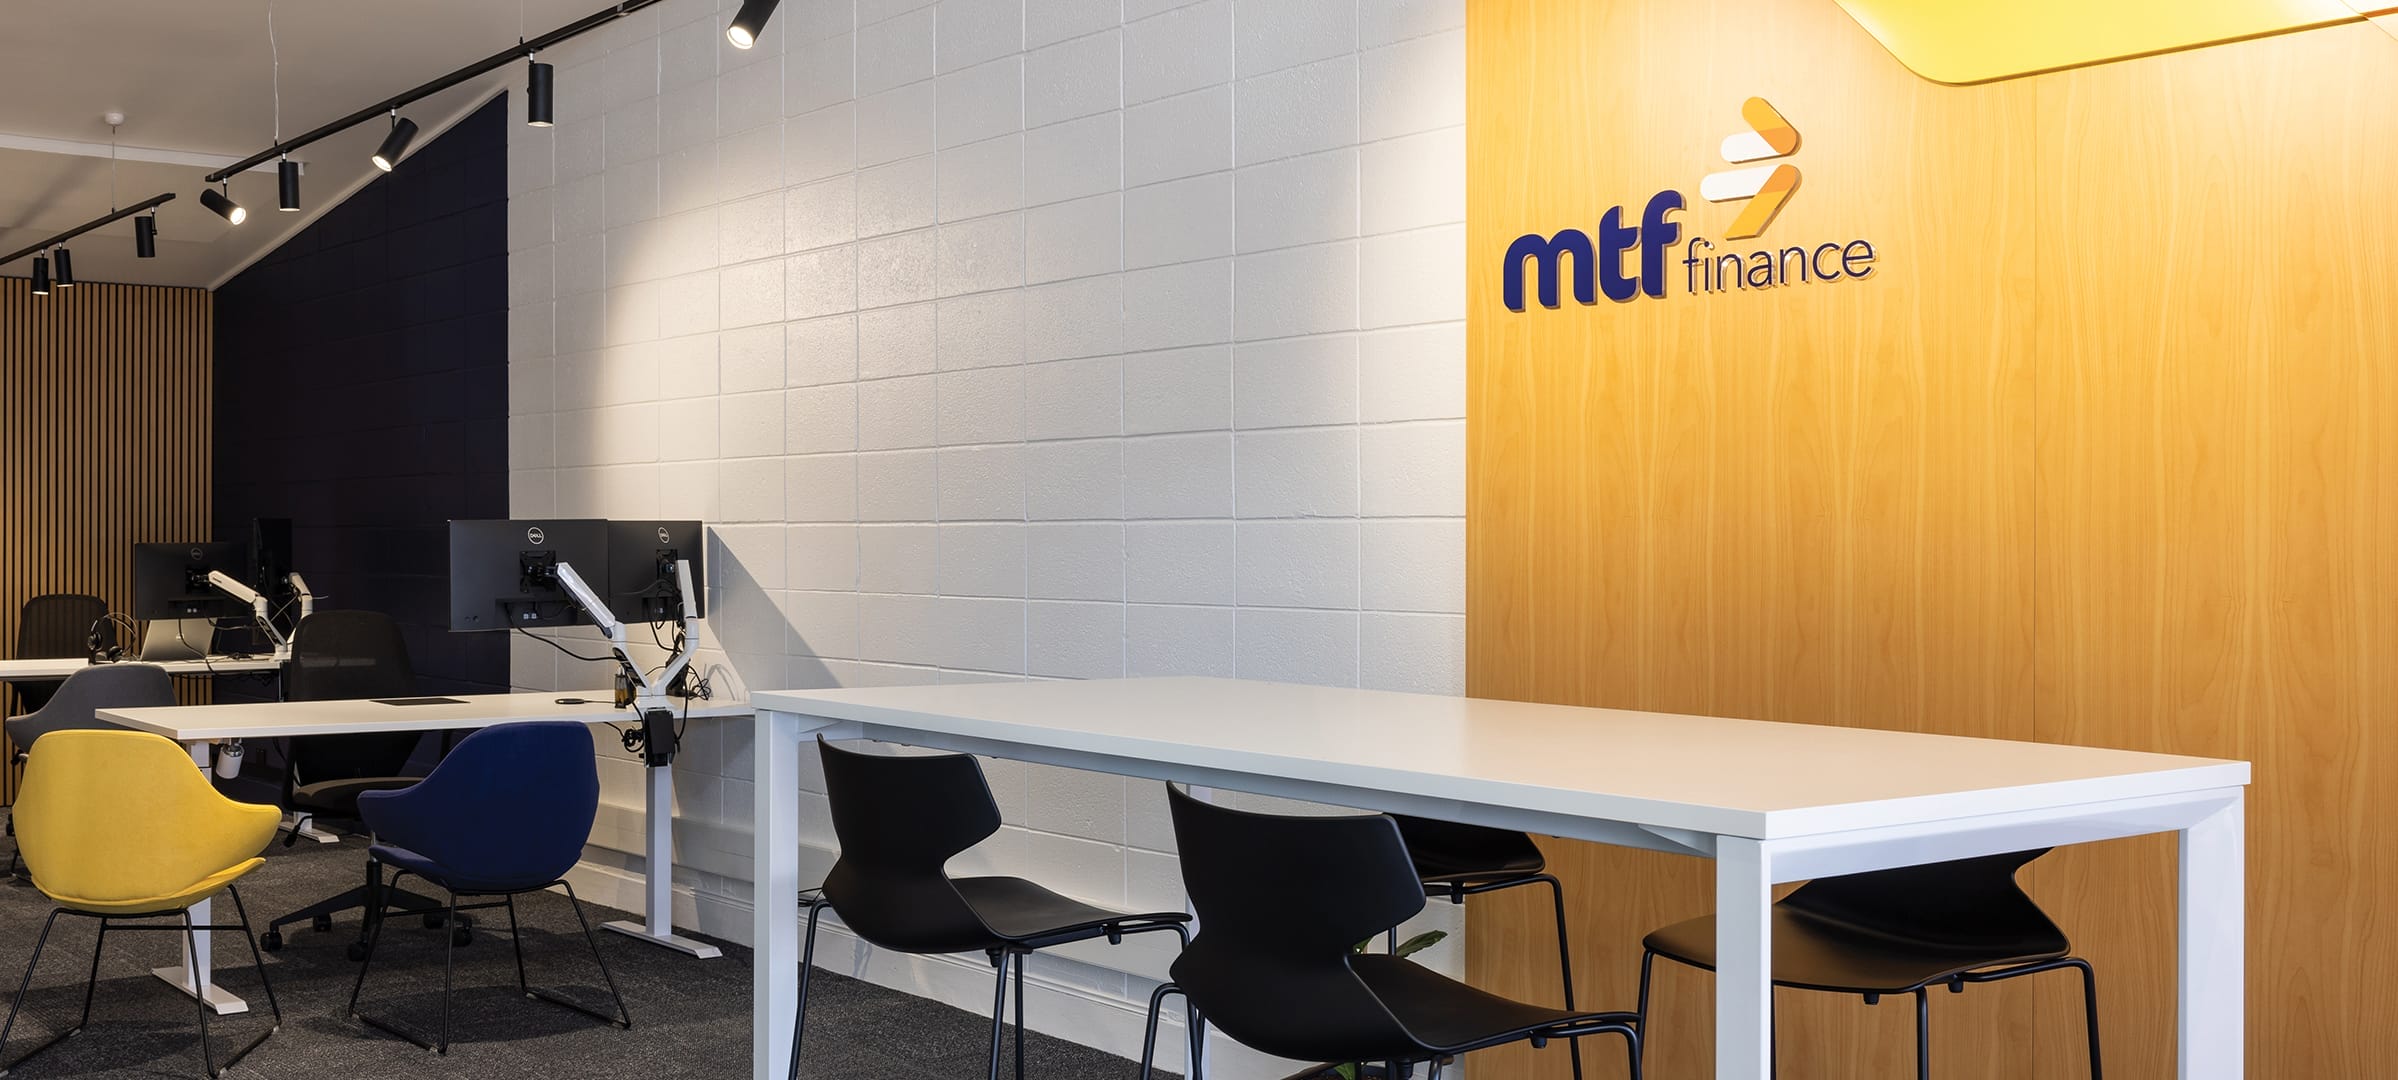 mtf finance interior furniture